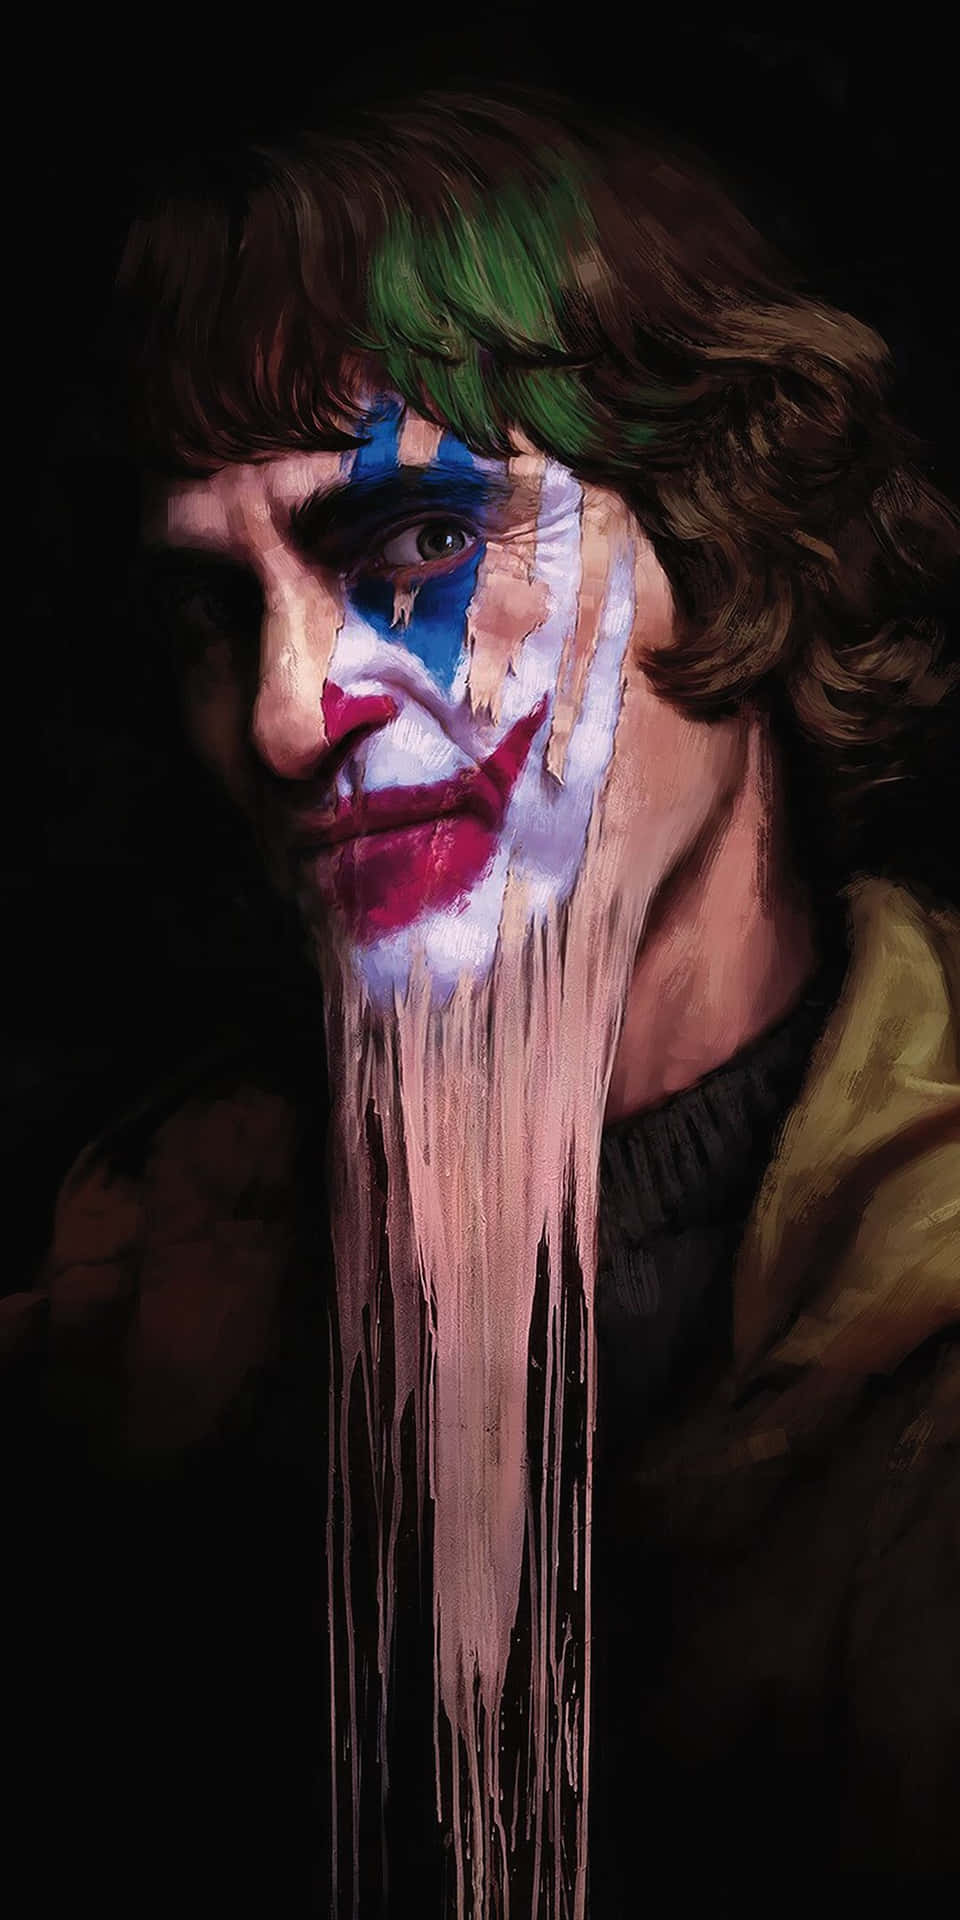 Mesmerizing Joker Painting in Vibrant Colors Wallpaper